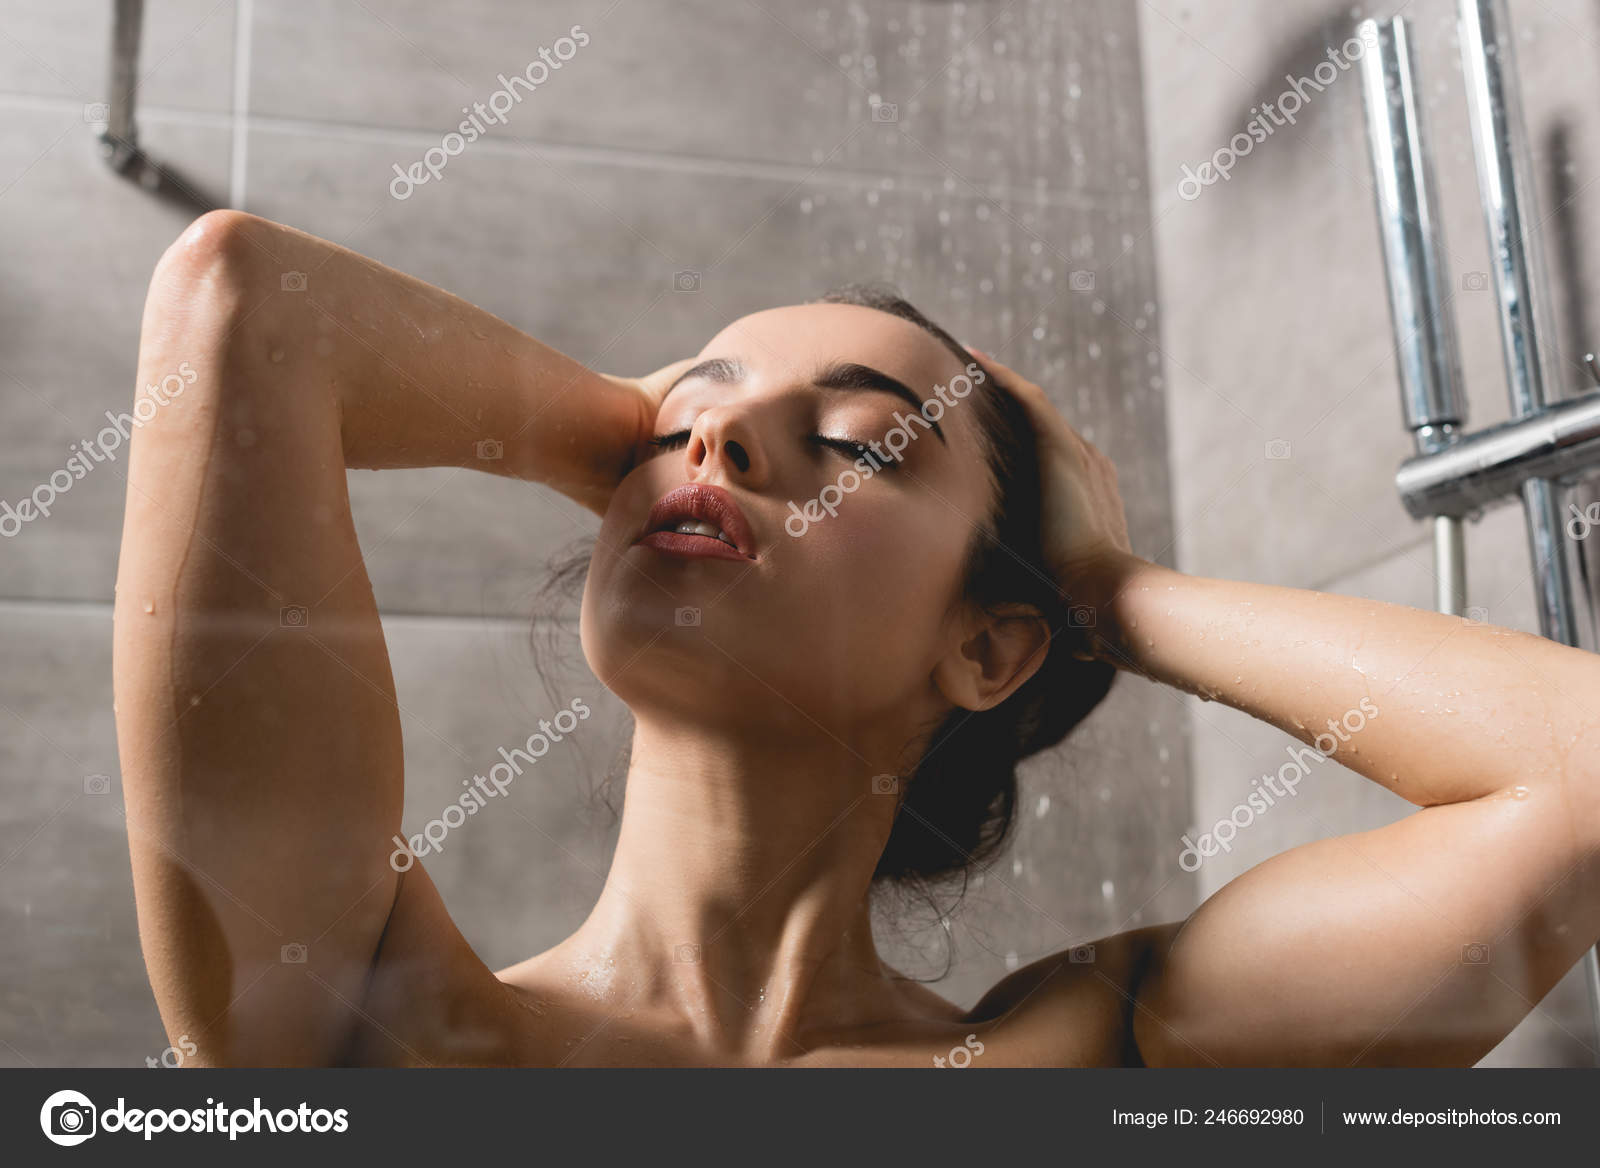 Hot Naked Women In The Shower